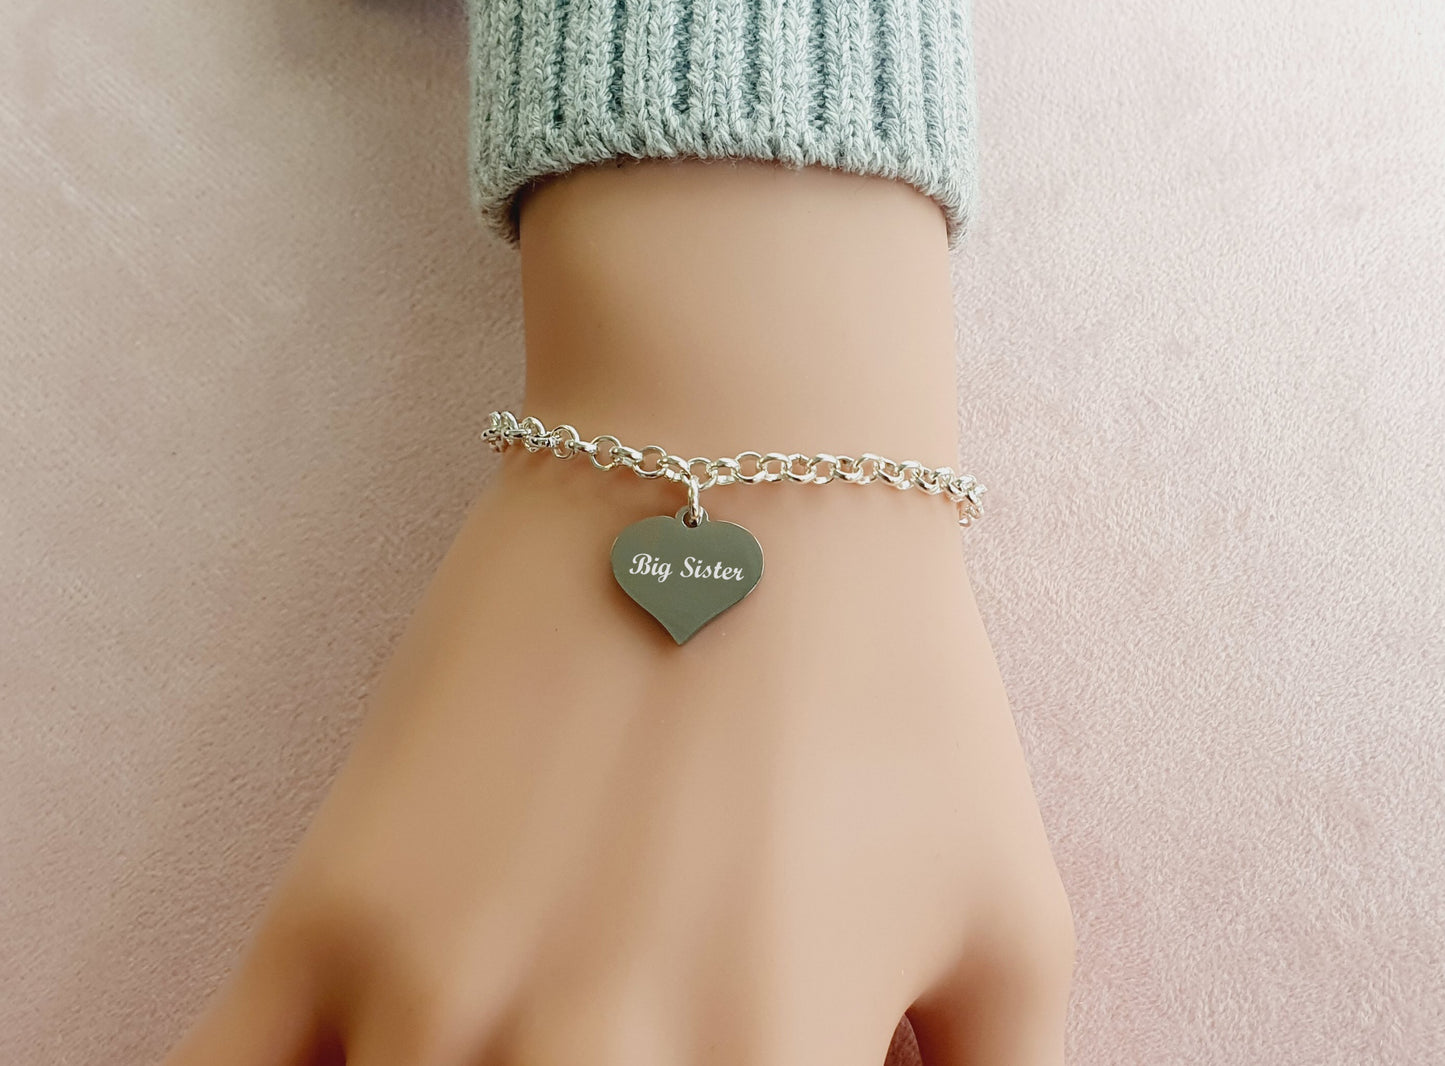 Big Sister Engraved Heart Charm Link Bracelet Message Jewellery